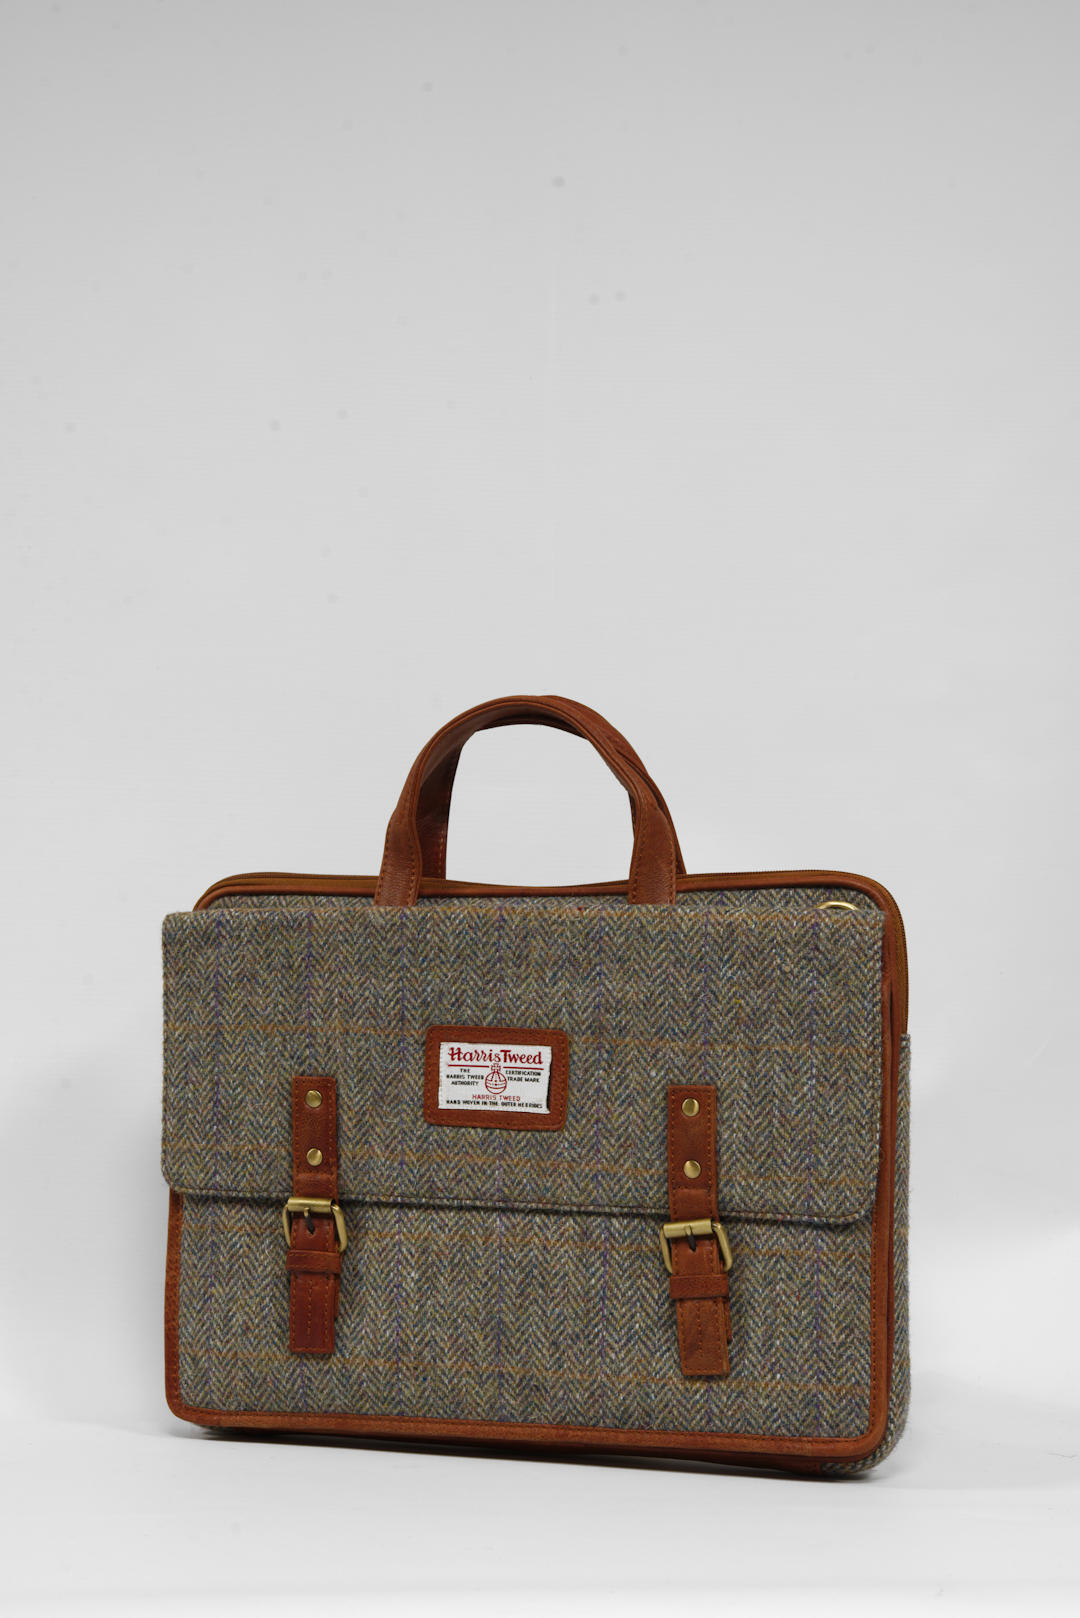 Harris Tweed Laptop Bag | HB107 Tan Leather